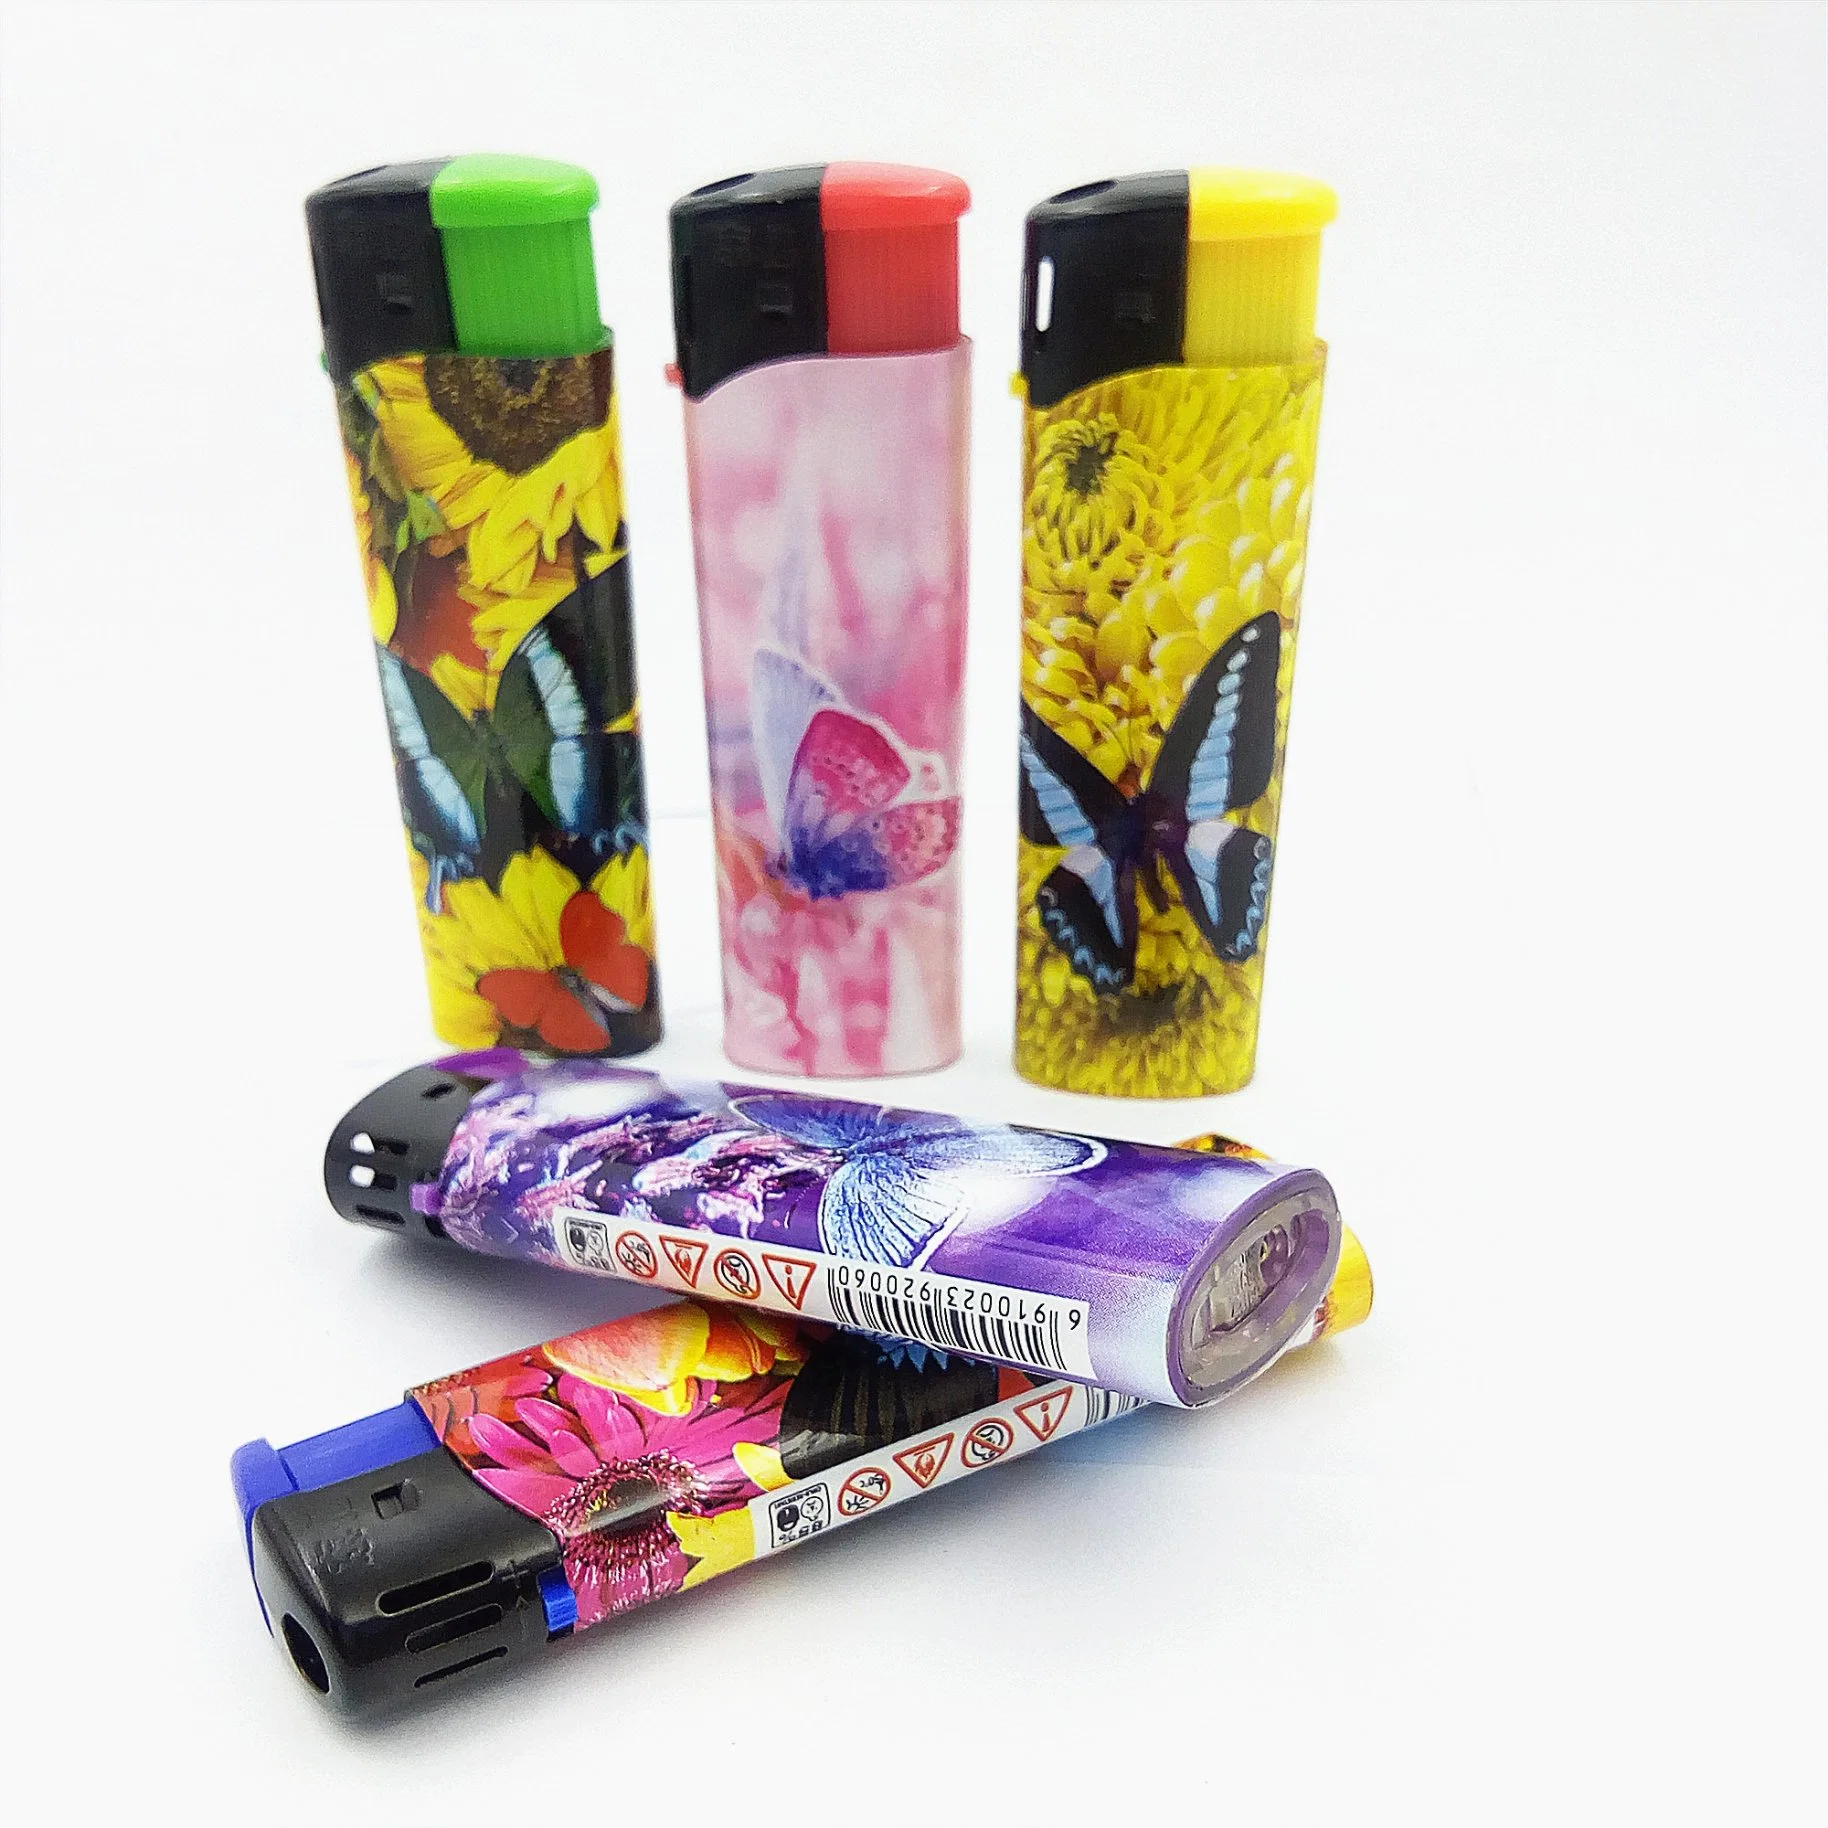 Hunan Dongyi Best Quality EU Standard Plastic Electric Cigarette Electric Lighter Children Resistance